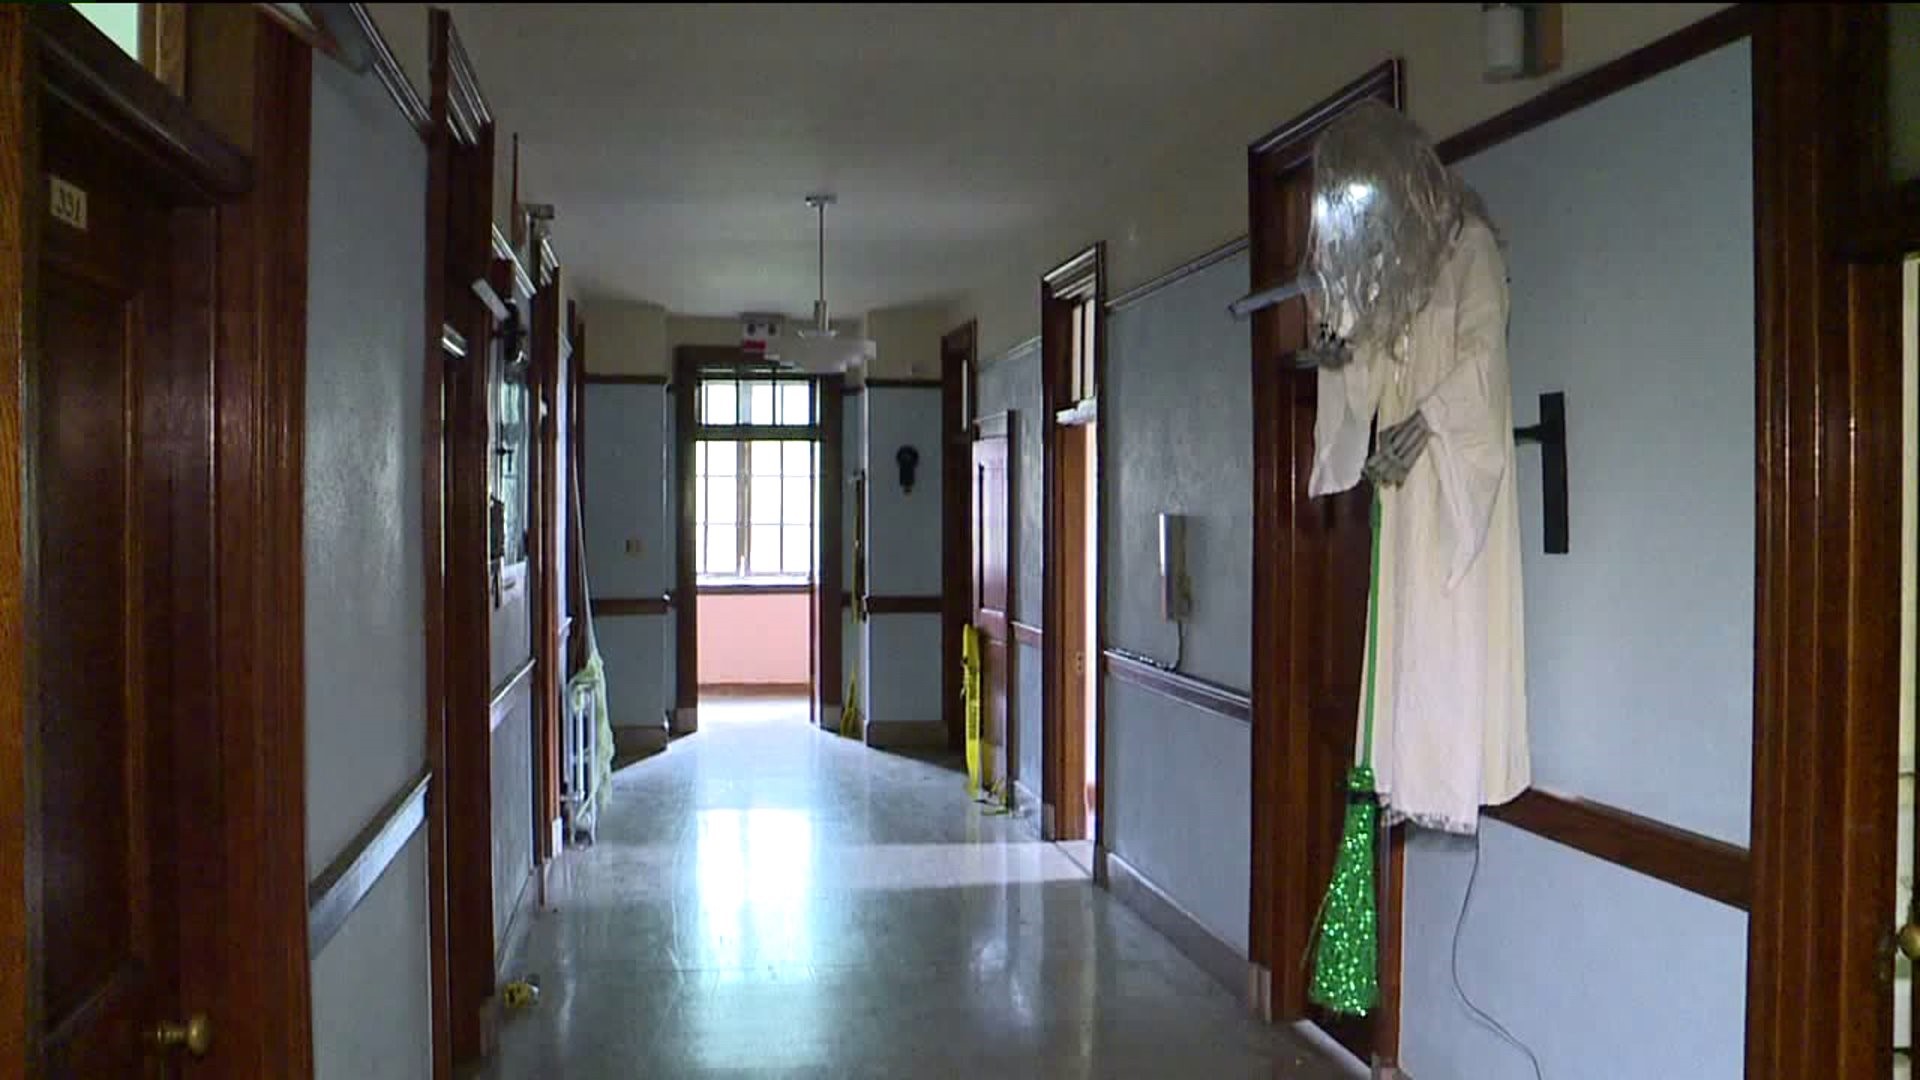 Former Catholic School Turned into Haunted Mansion